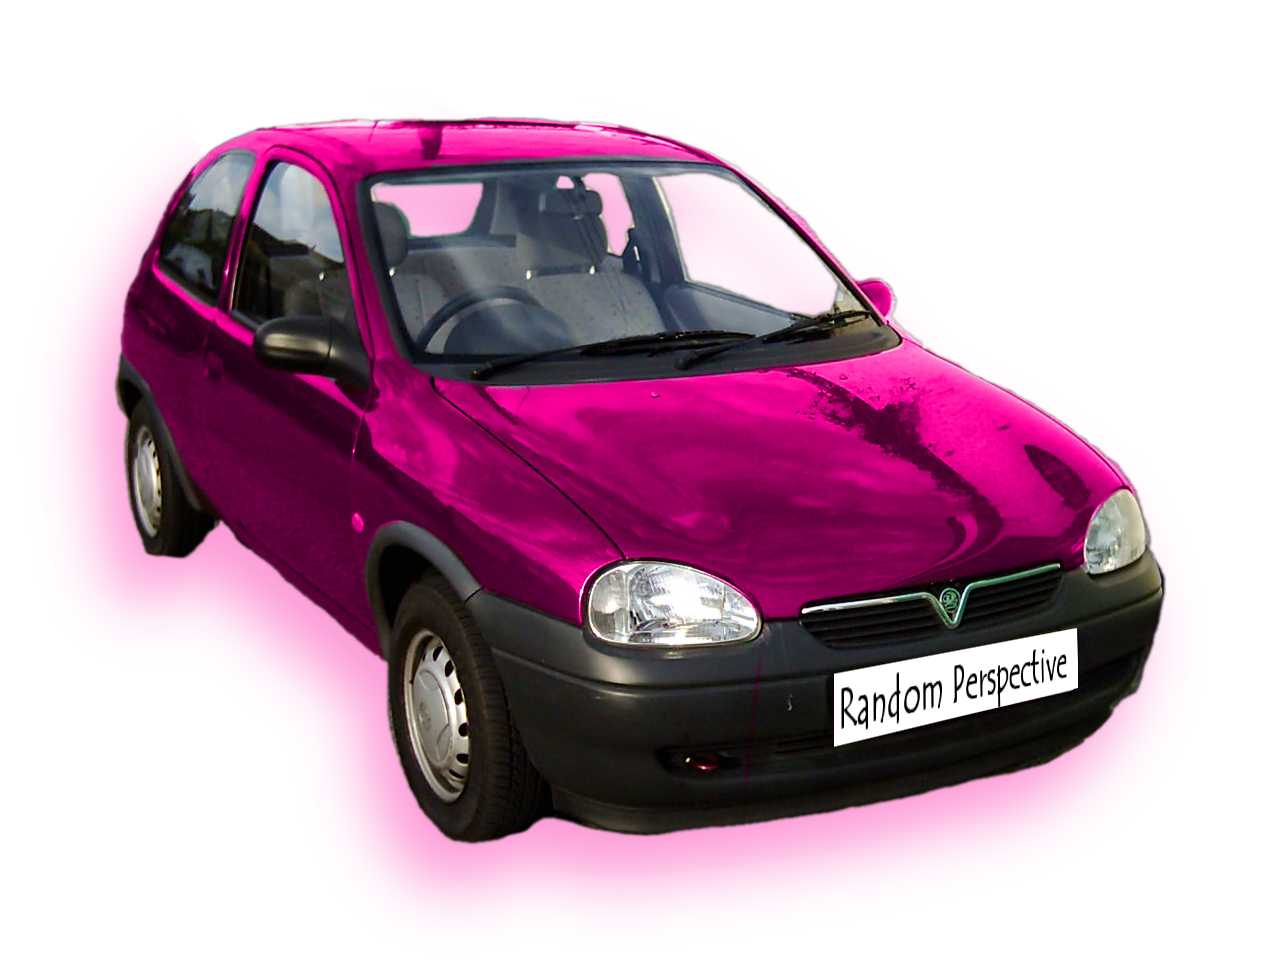 Random Perspective: Pink Vauxhall Corsa1280 x 960